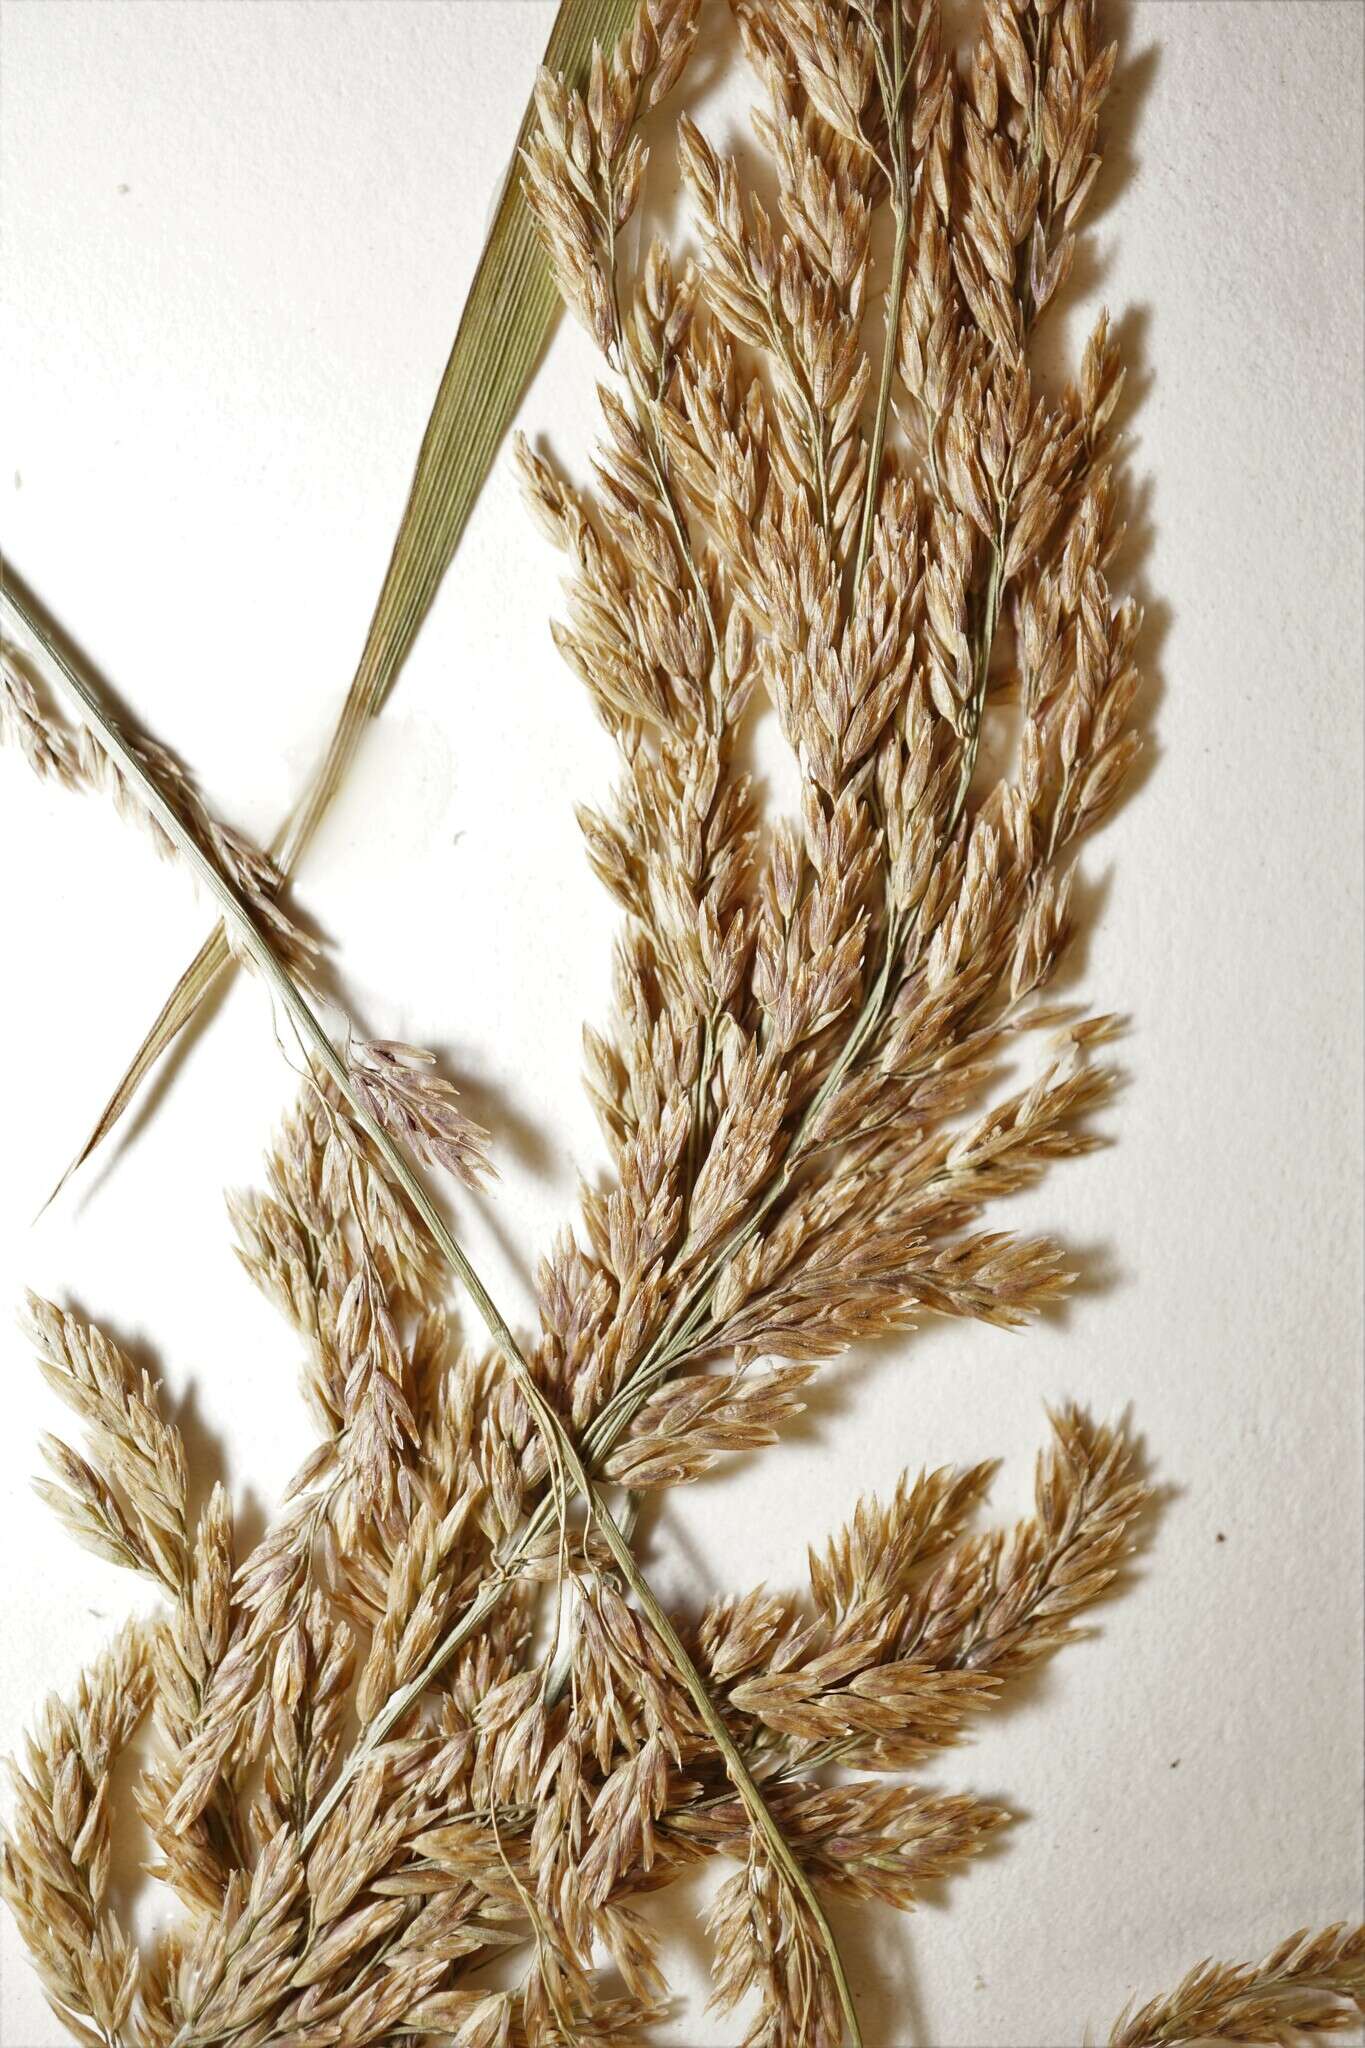 Image of wideleaf polargrass